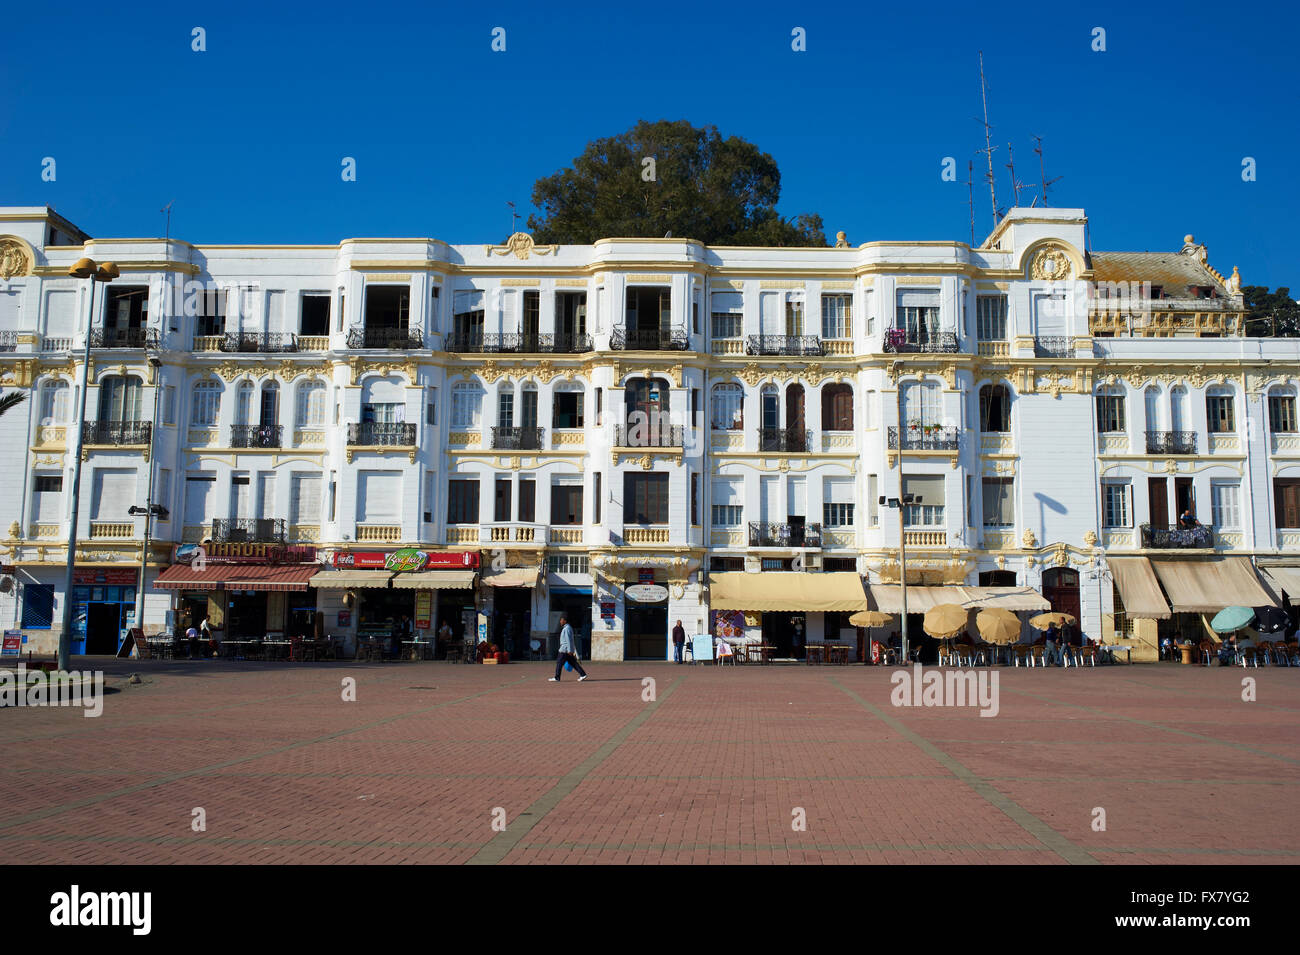 Morocco, Tangier, Medina, old city, Espagne street Stock Photo